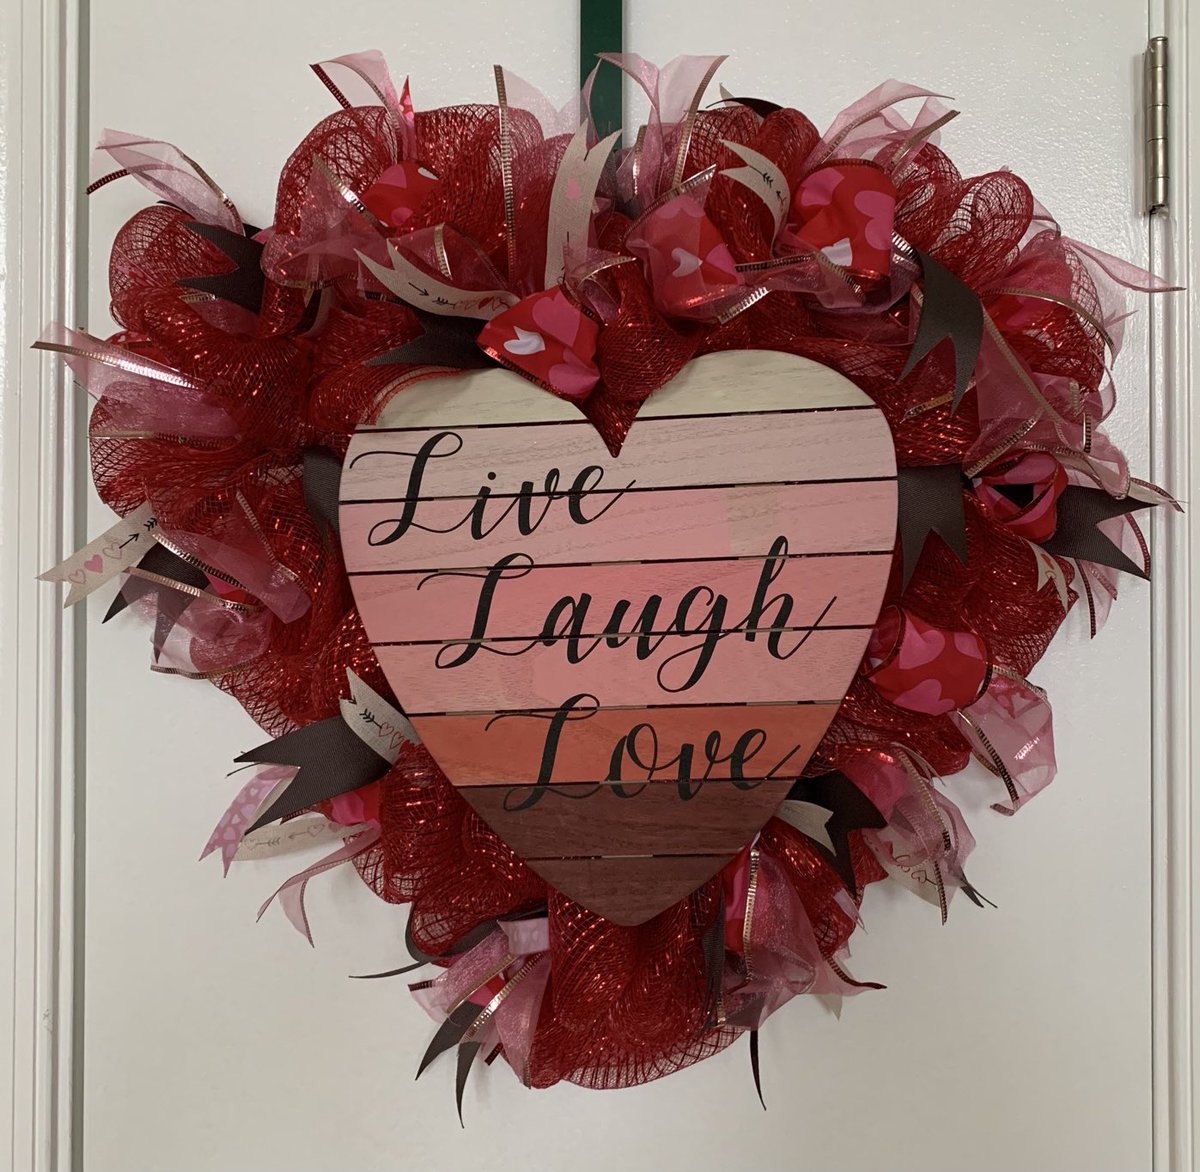 Live, Love,Laugh Heart Wreath, Valentine’s Day Wreath, #etsy #meshheartwreath #wreath #farmhousewreath #heartwreath #liveloveandlaugh #valentinewreath #valentinedaydecor #valentinedecoration #seasonaldecoration etsy.me/2YCA4zd